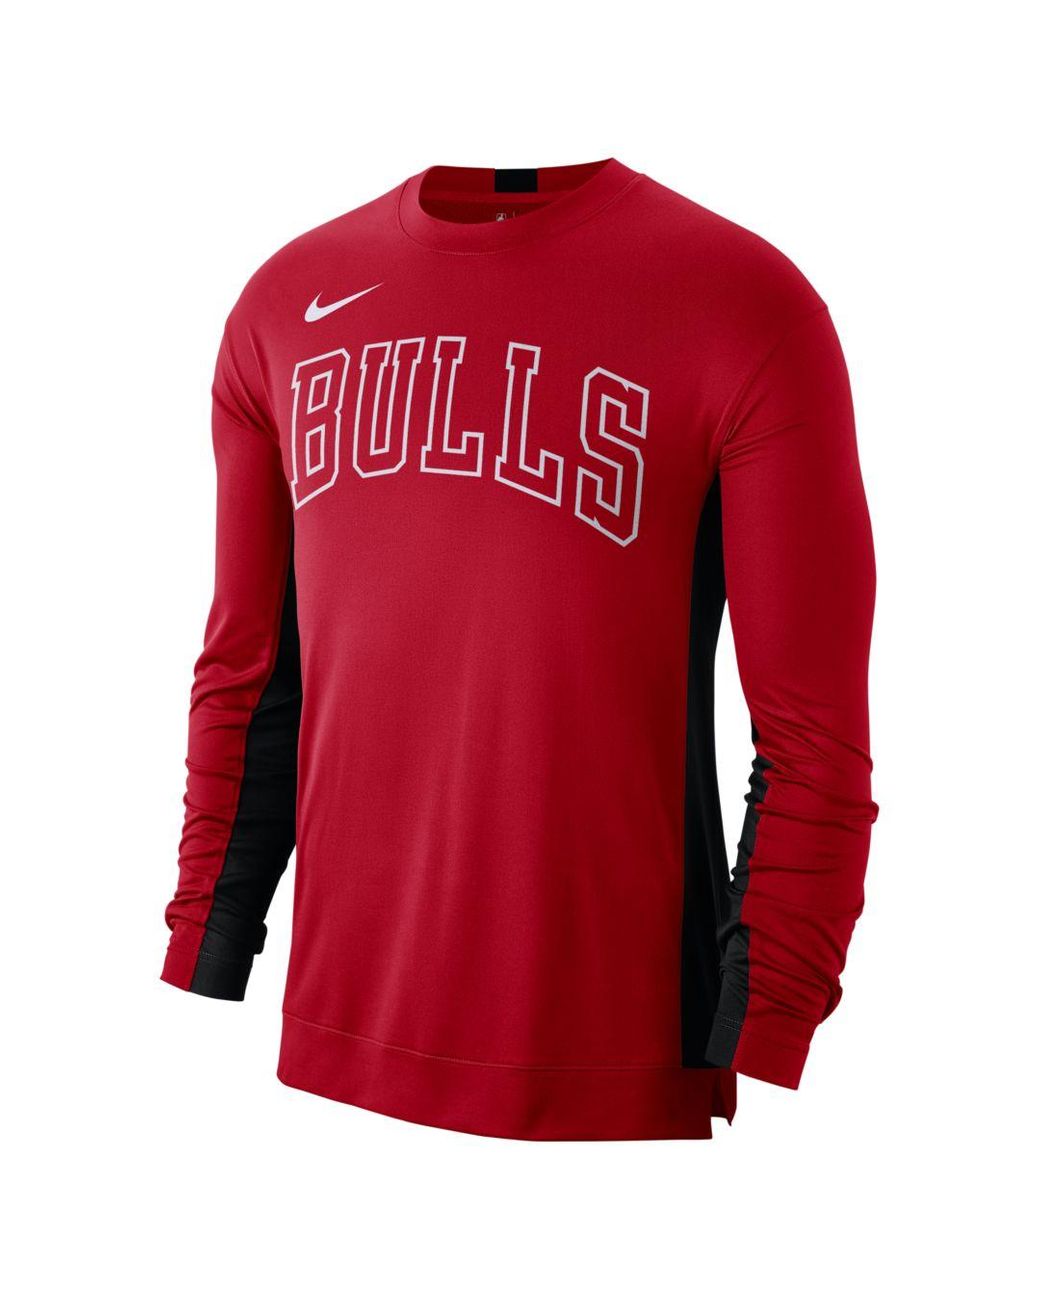 Nike Chicago Bulls Dri-fit Nba Shooting Shirt in Red for Men - Lyst